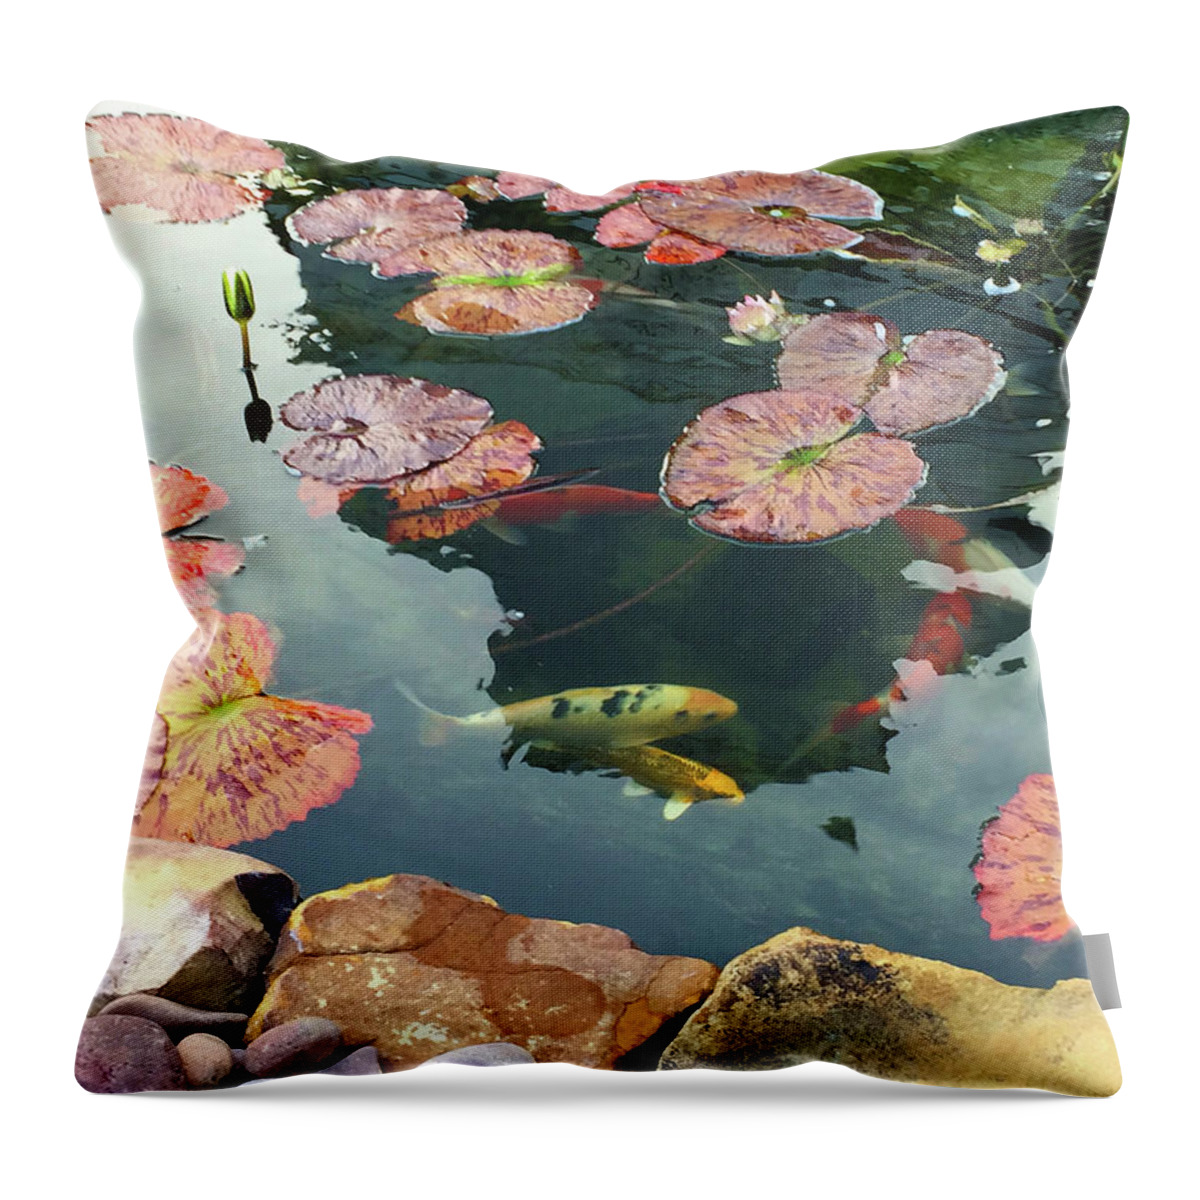 Koi Pond Throw Pillow featuring the photograph Koi and Waterlily Pads by Karen Zuk Rosenblatt